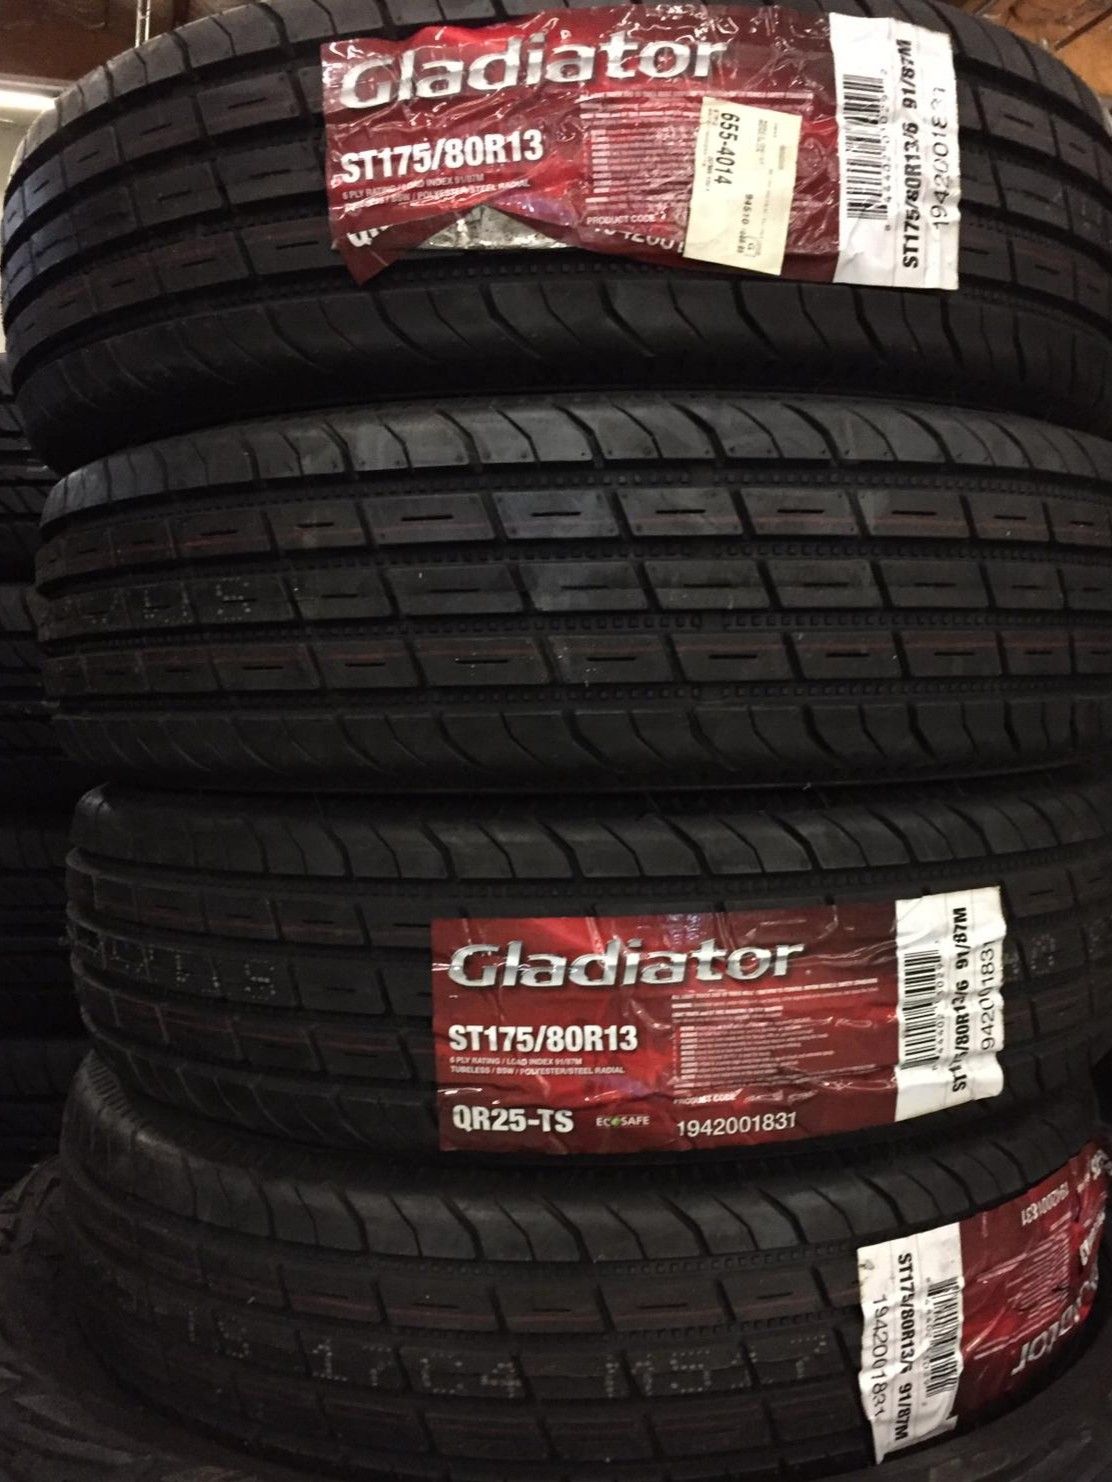 175/80R13 Trailer tires on sale